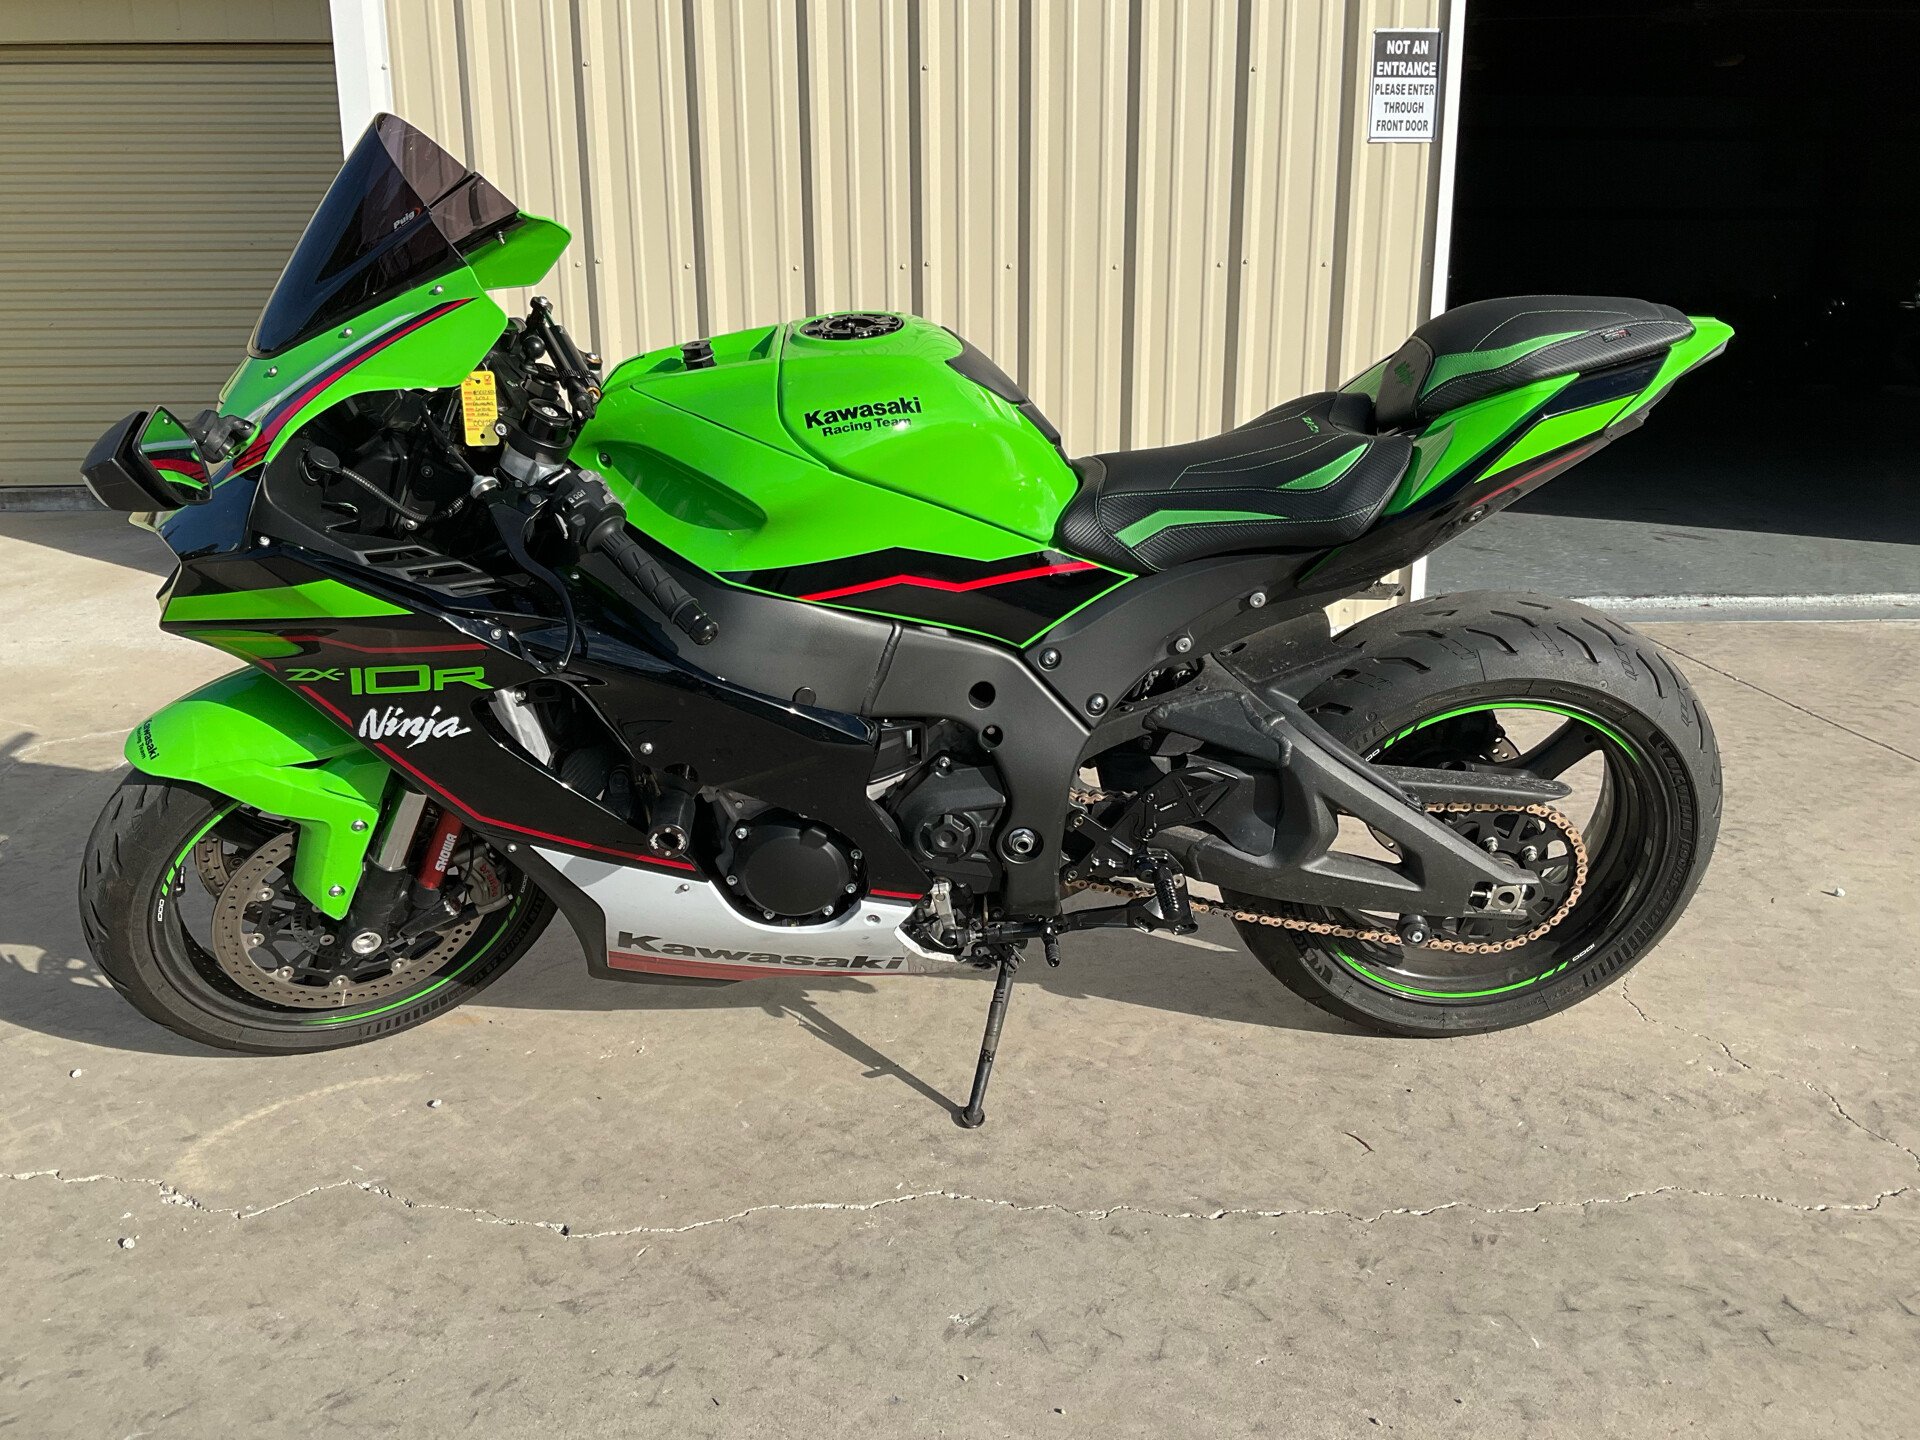 2021 Kawasaki Ninja ZX-10R Motorcycles for Sale - Motorcycles on 